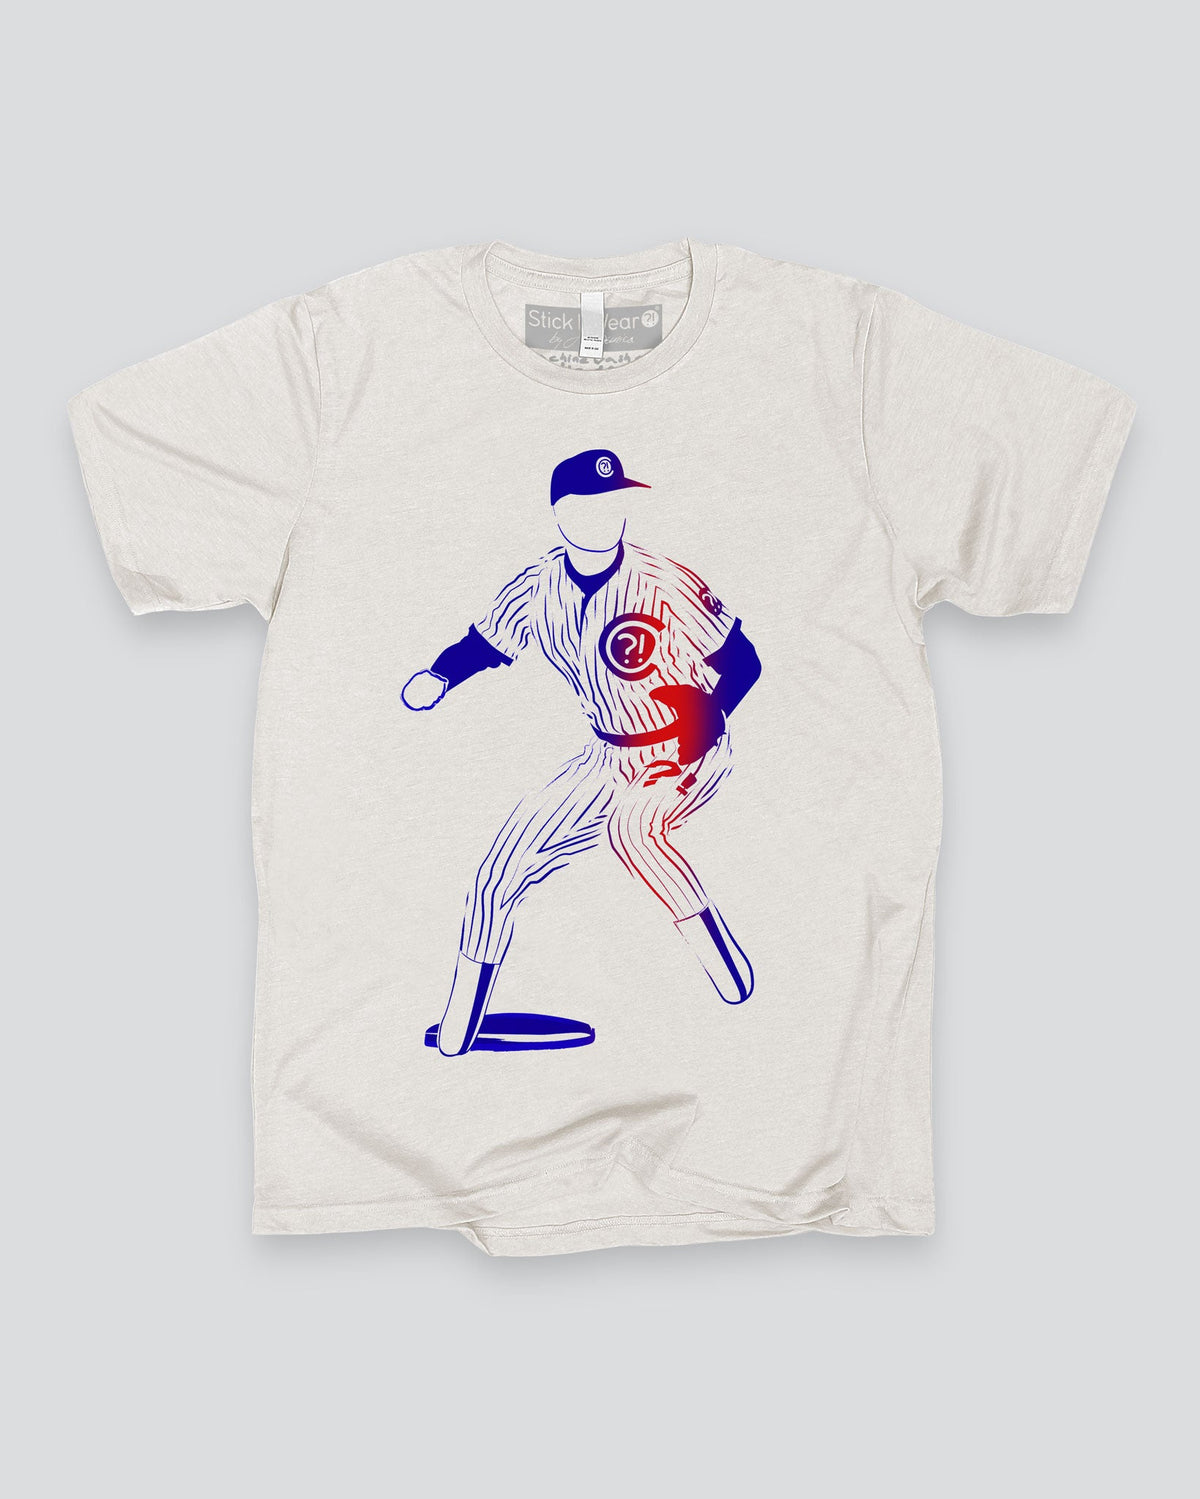 FRIENDLY CONFINES Baseball Stance T-Shirt